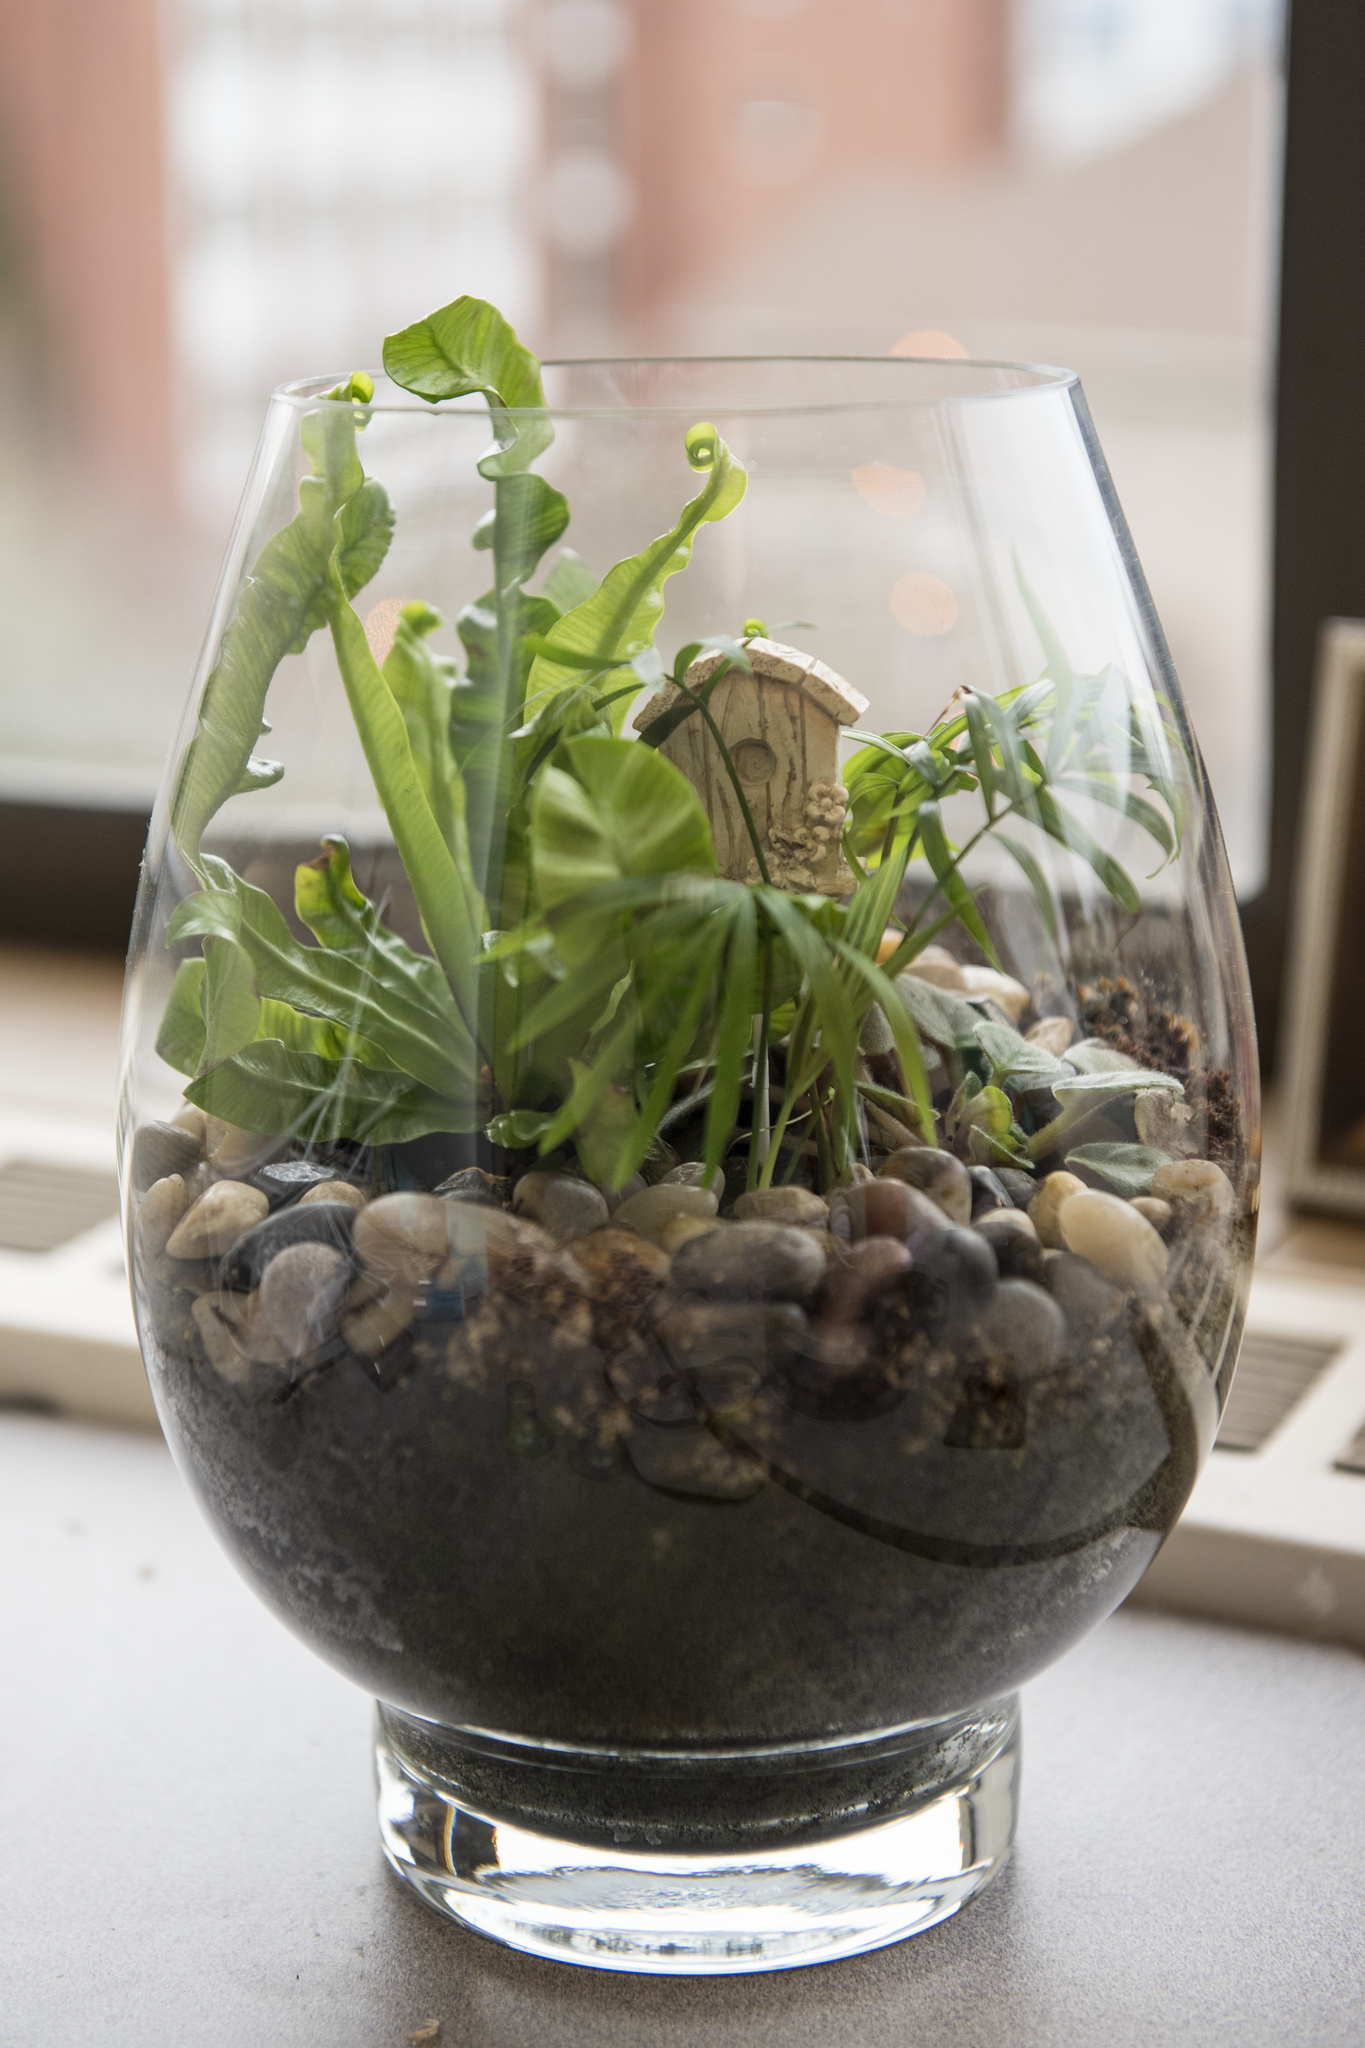 Go miniature with a glass terrarium